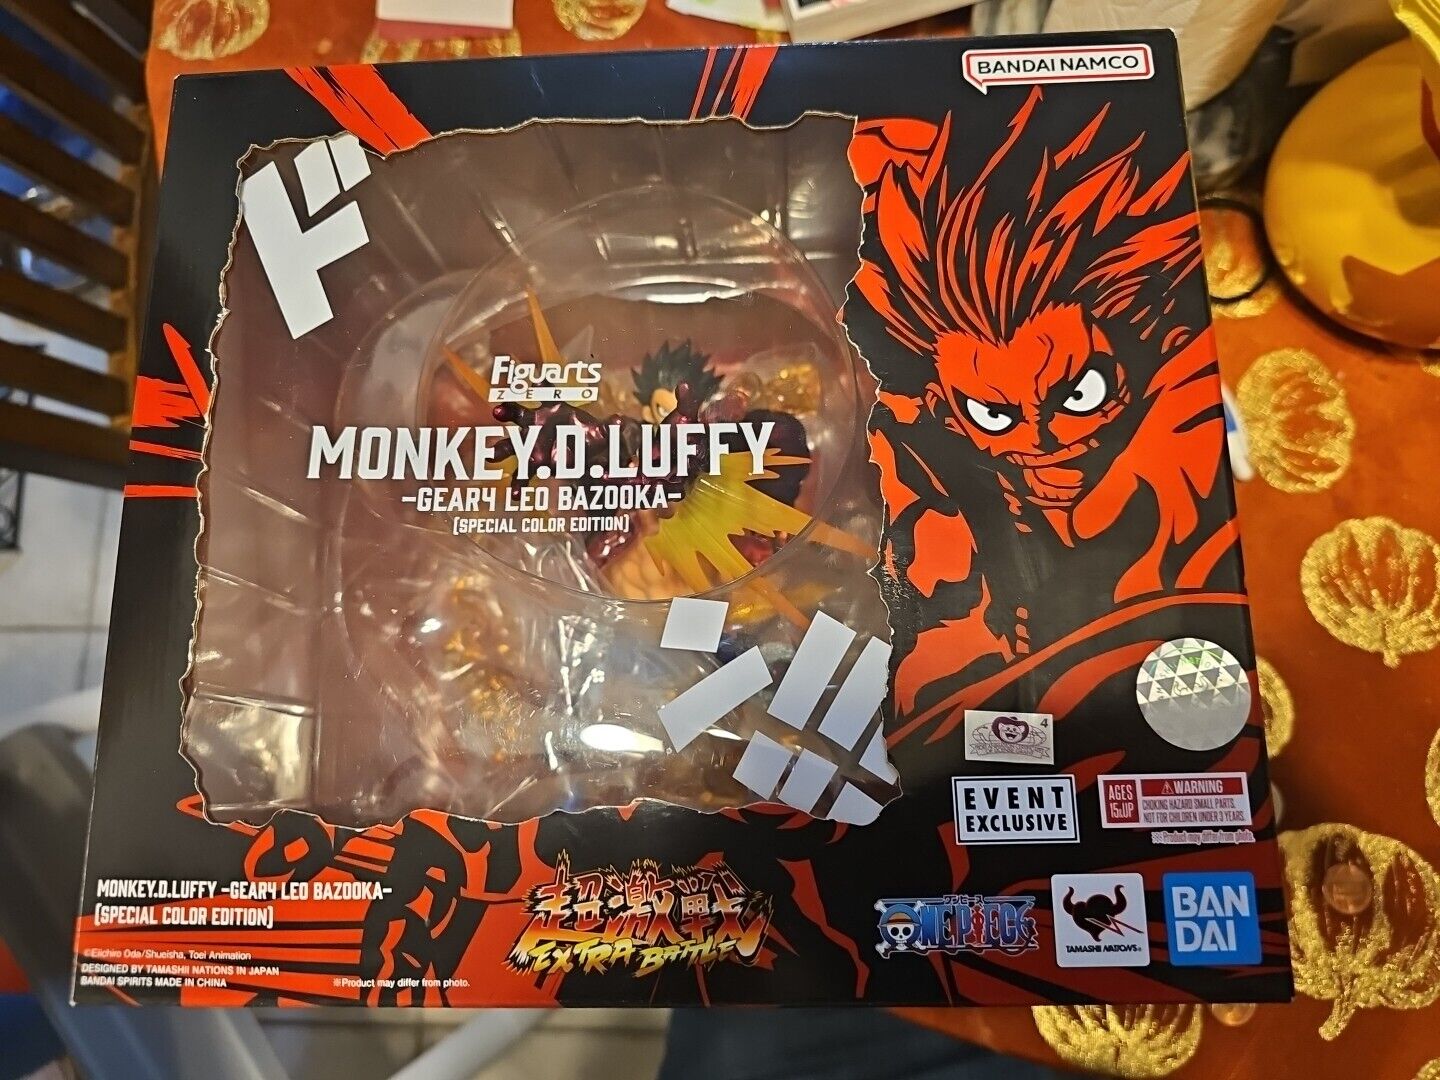 Figuarts ZERO One Piece Monkey D Luffy Gear 4 Leo Bazooka SPECIAL COLOR EDITION